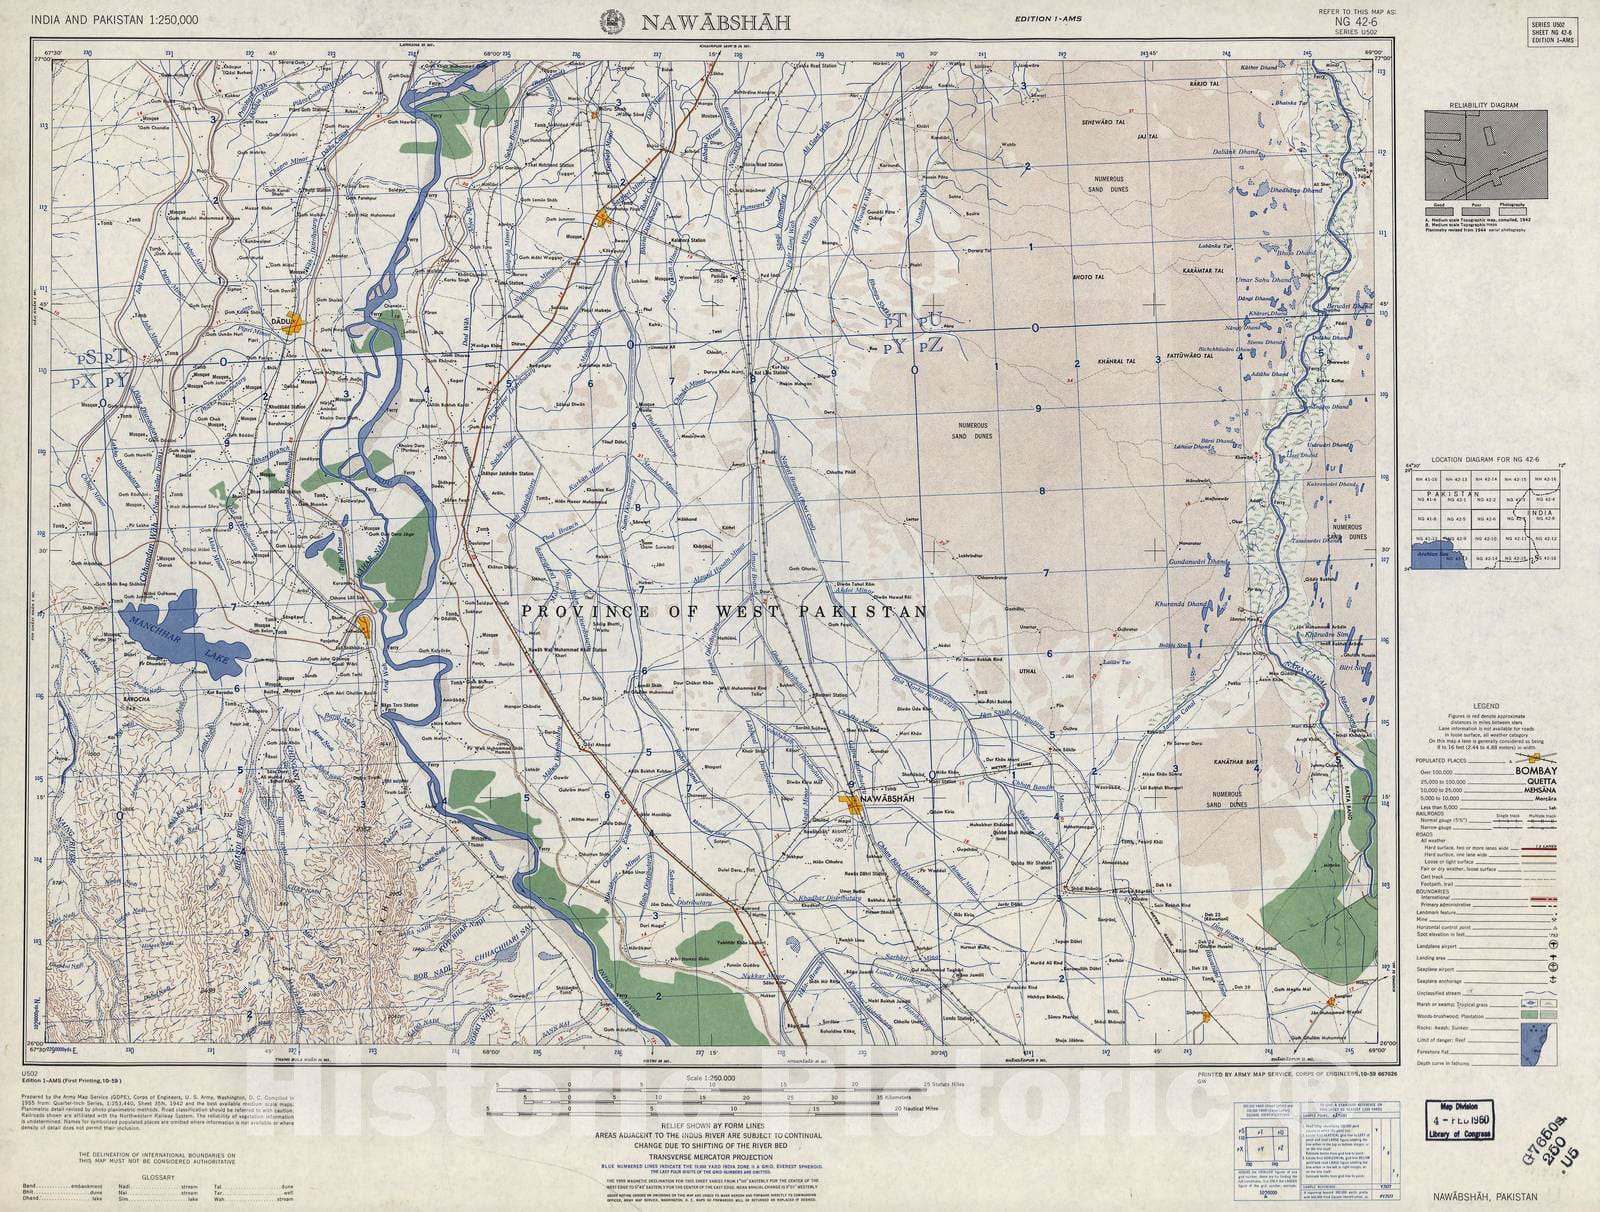 Historic 1955 Map - India and Pakistan 1:250,000. - Nawabshah, Pakistan 1959